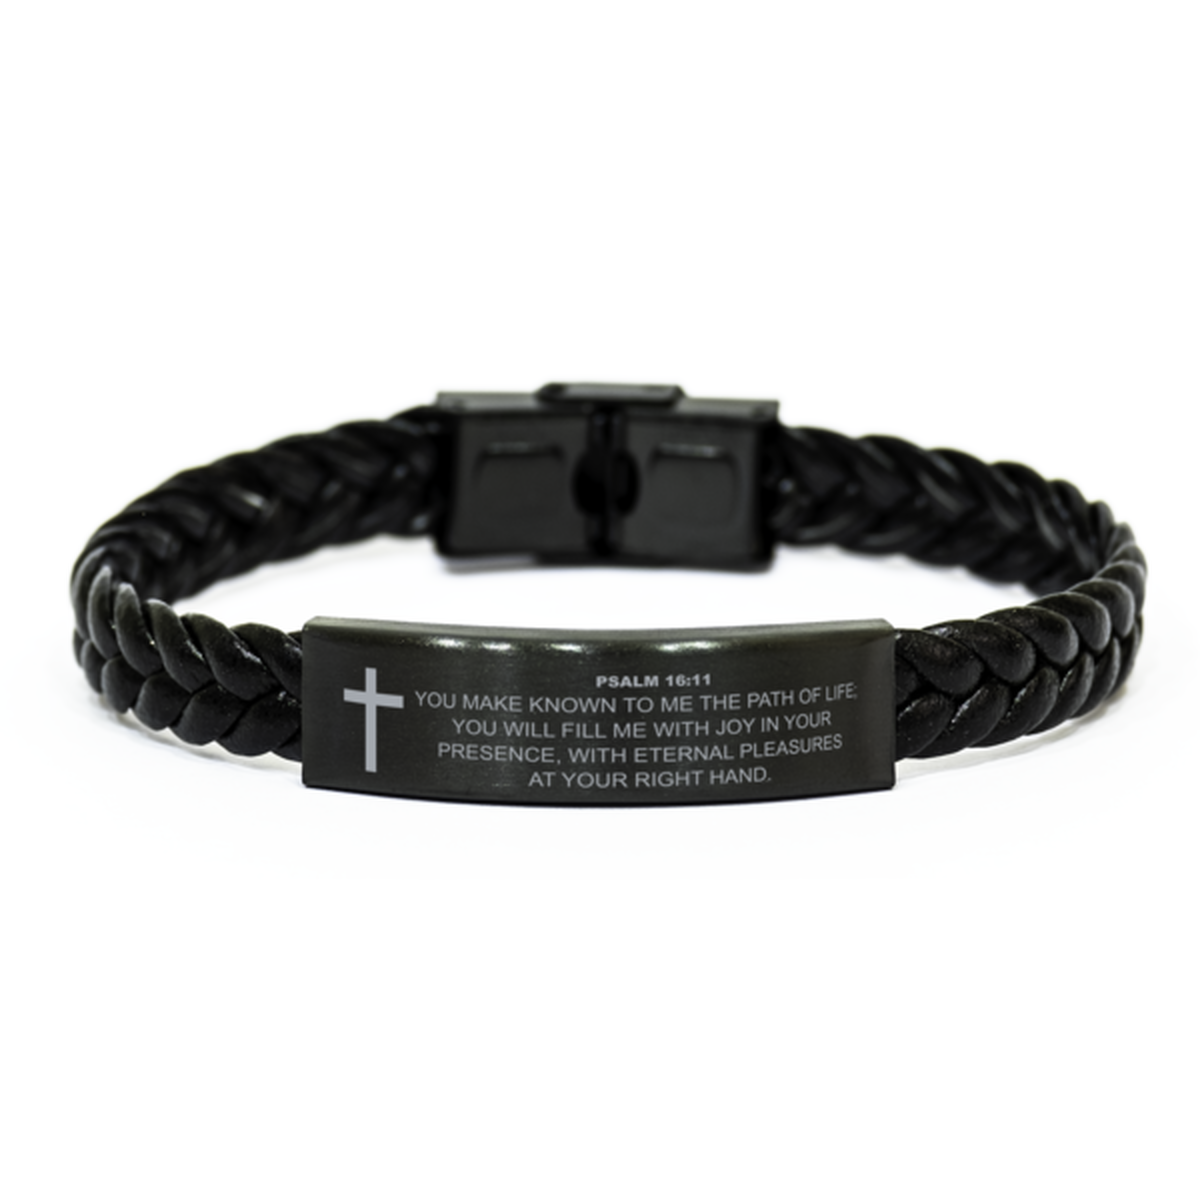 Psalm 16:11 Bracelet, You Make Known To Me The Path Of Life, Bible Verse Bracelet, Christian Bracelet, Braided Leather Bracelet, Easter Gift